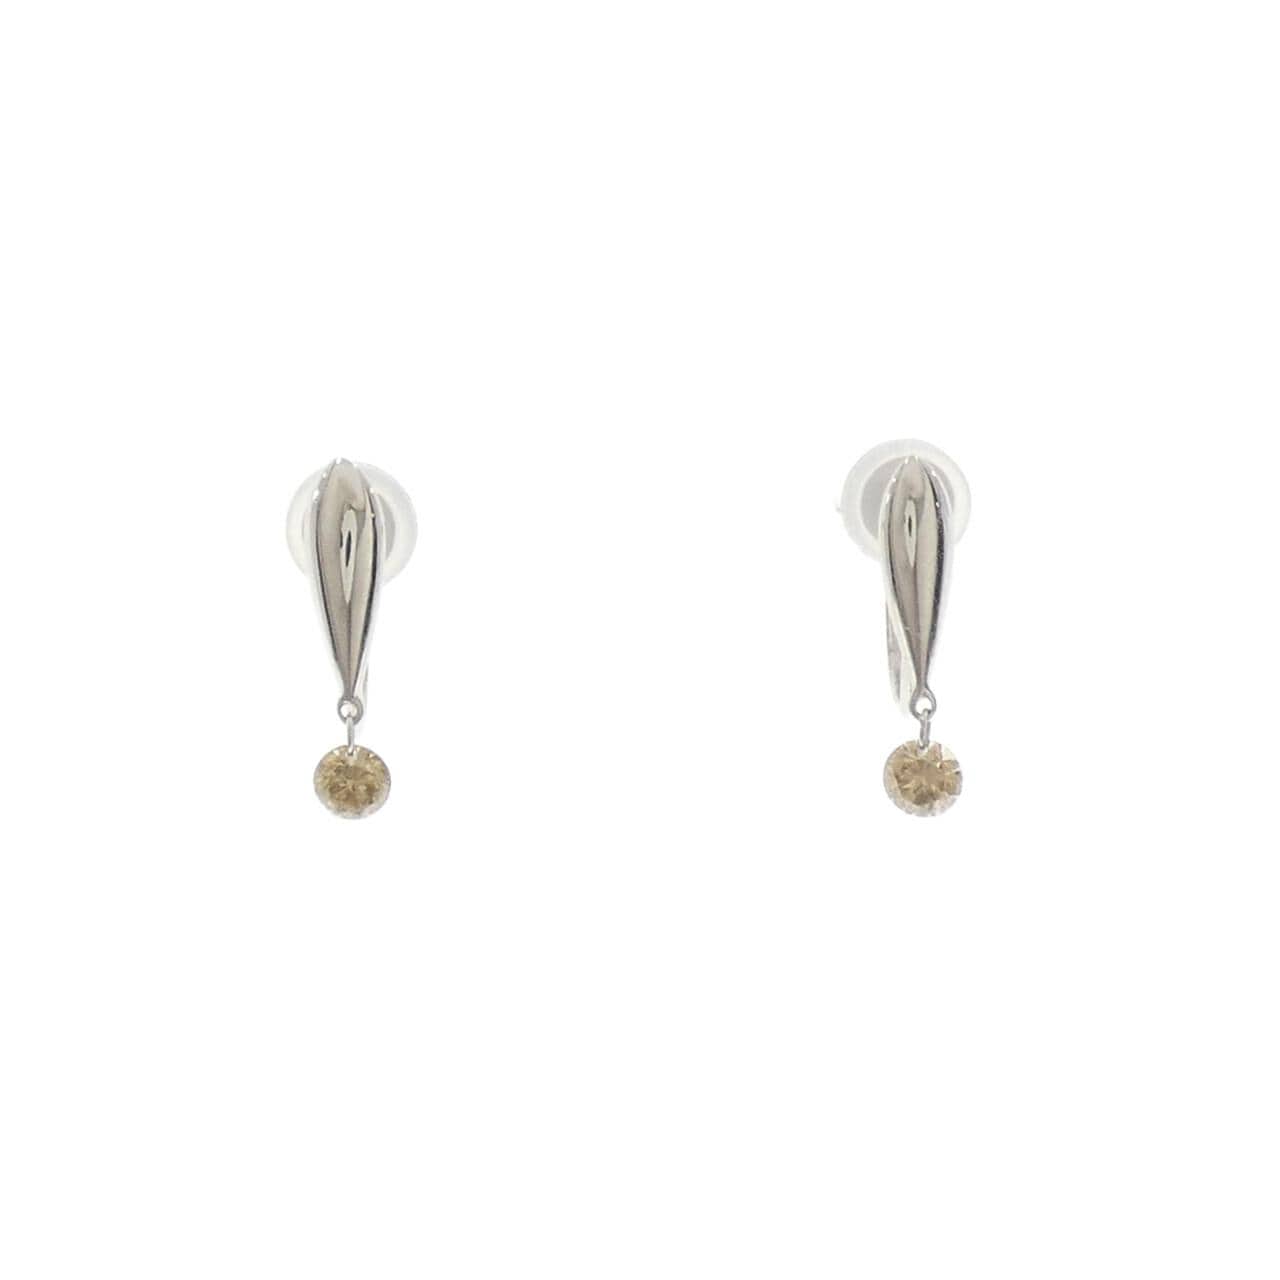 K18WG Diamond earrings 0.26CT